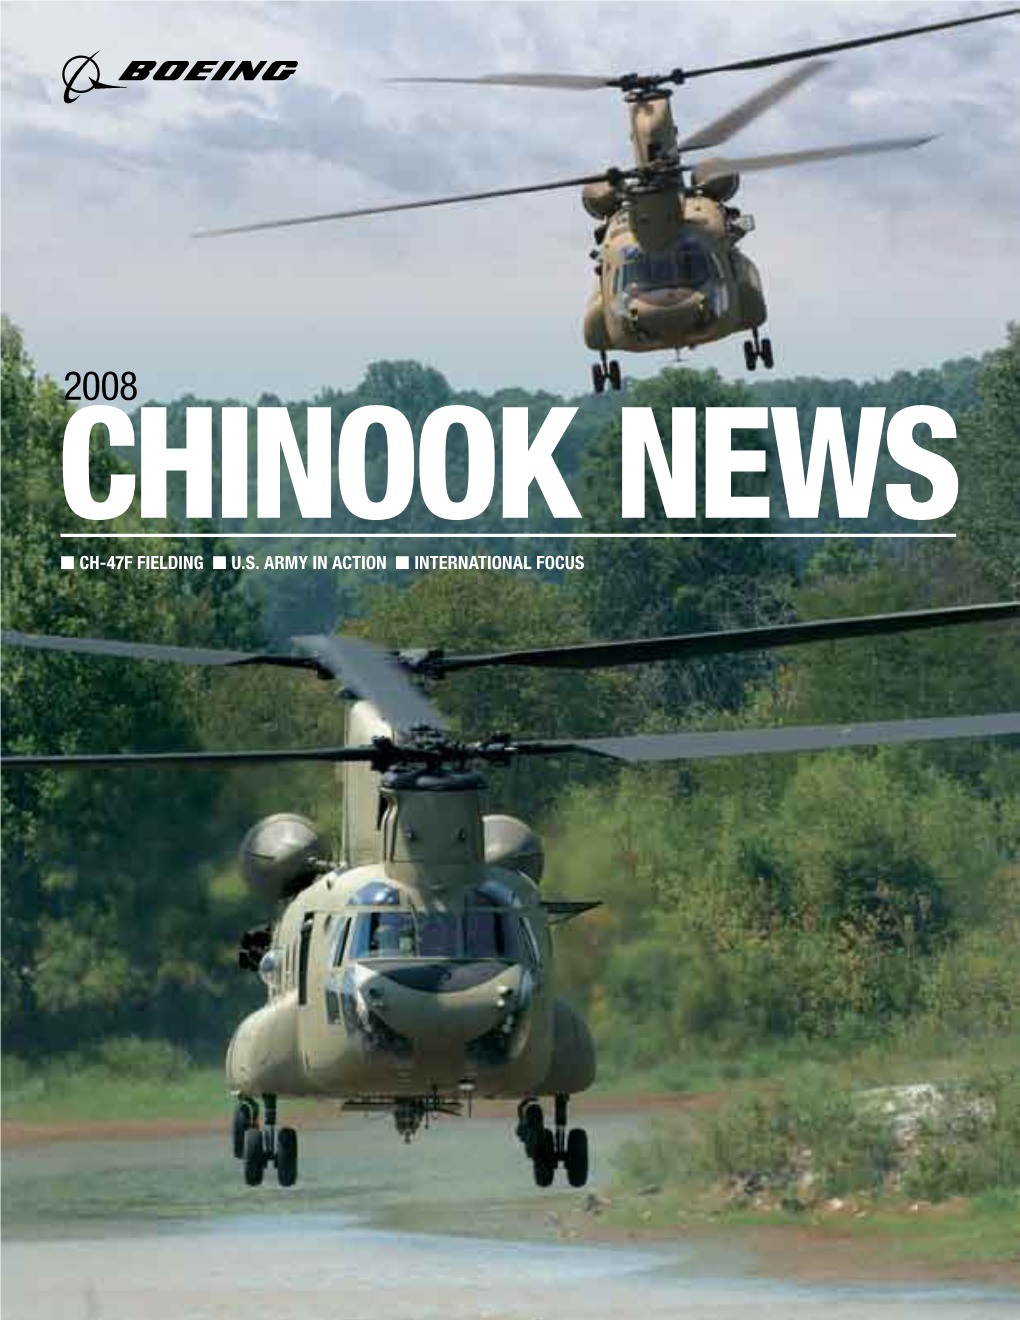 N CH-47F FIELDING N U.S. ARMY in ACTION N INTERNATIONAL FOCUS